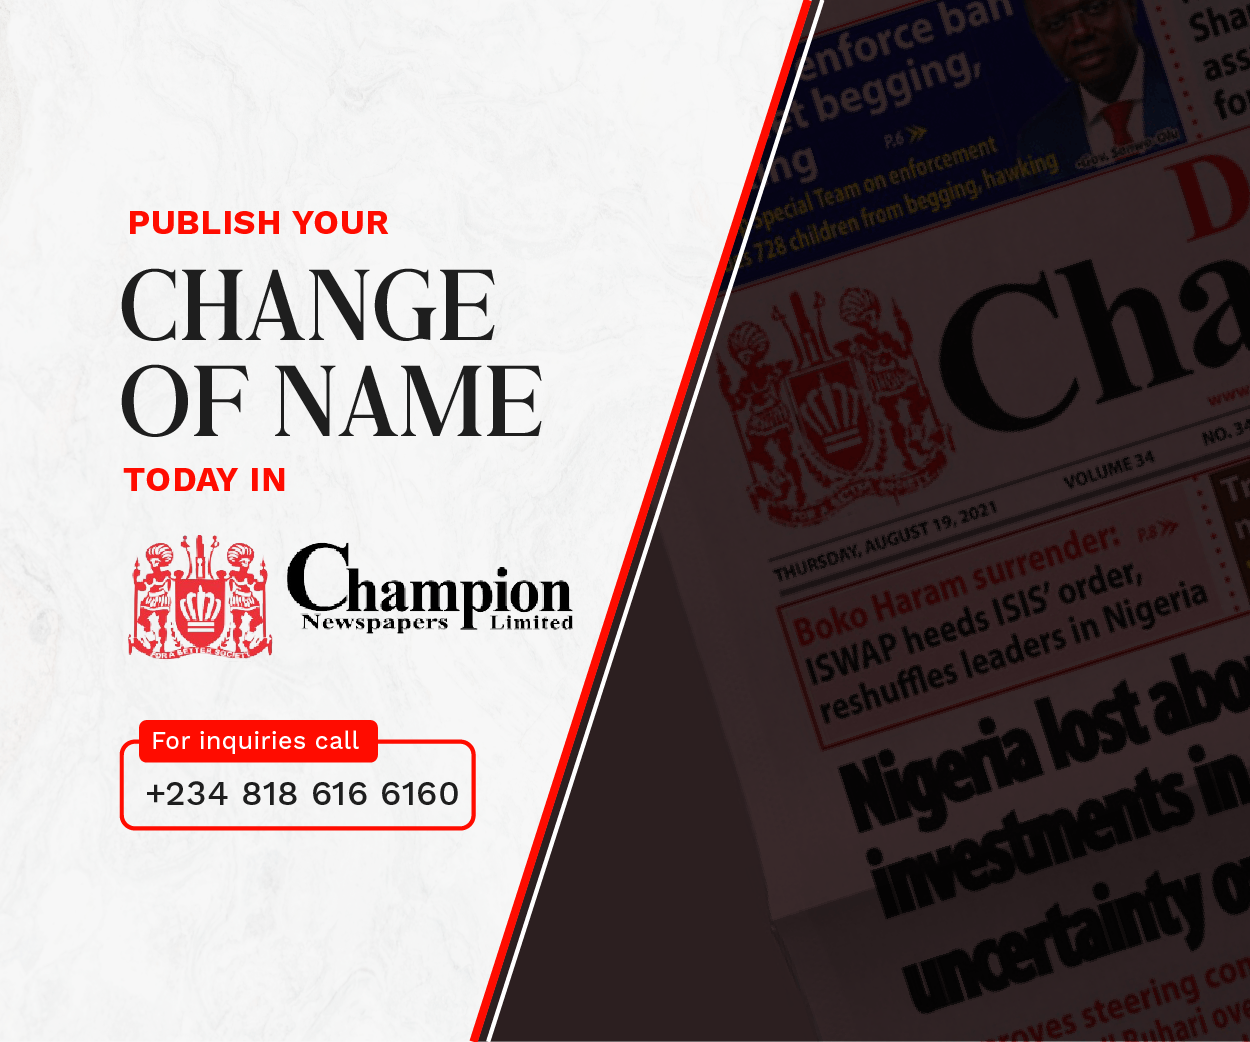 Champion Newspaper Limited | Newspaper company in Nigeria